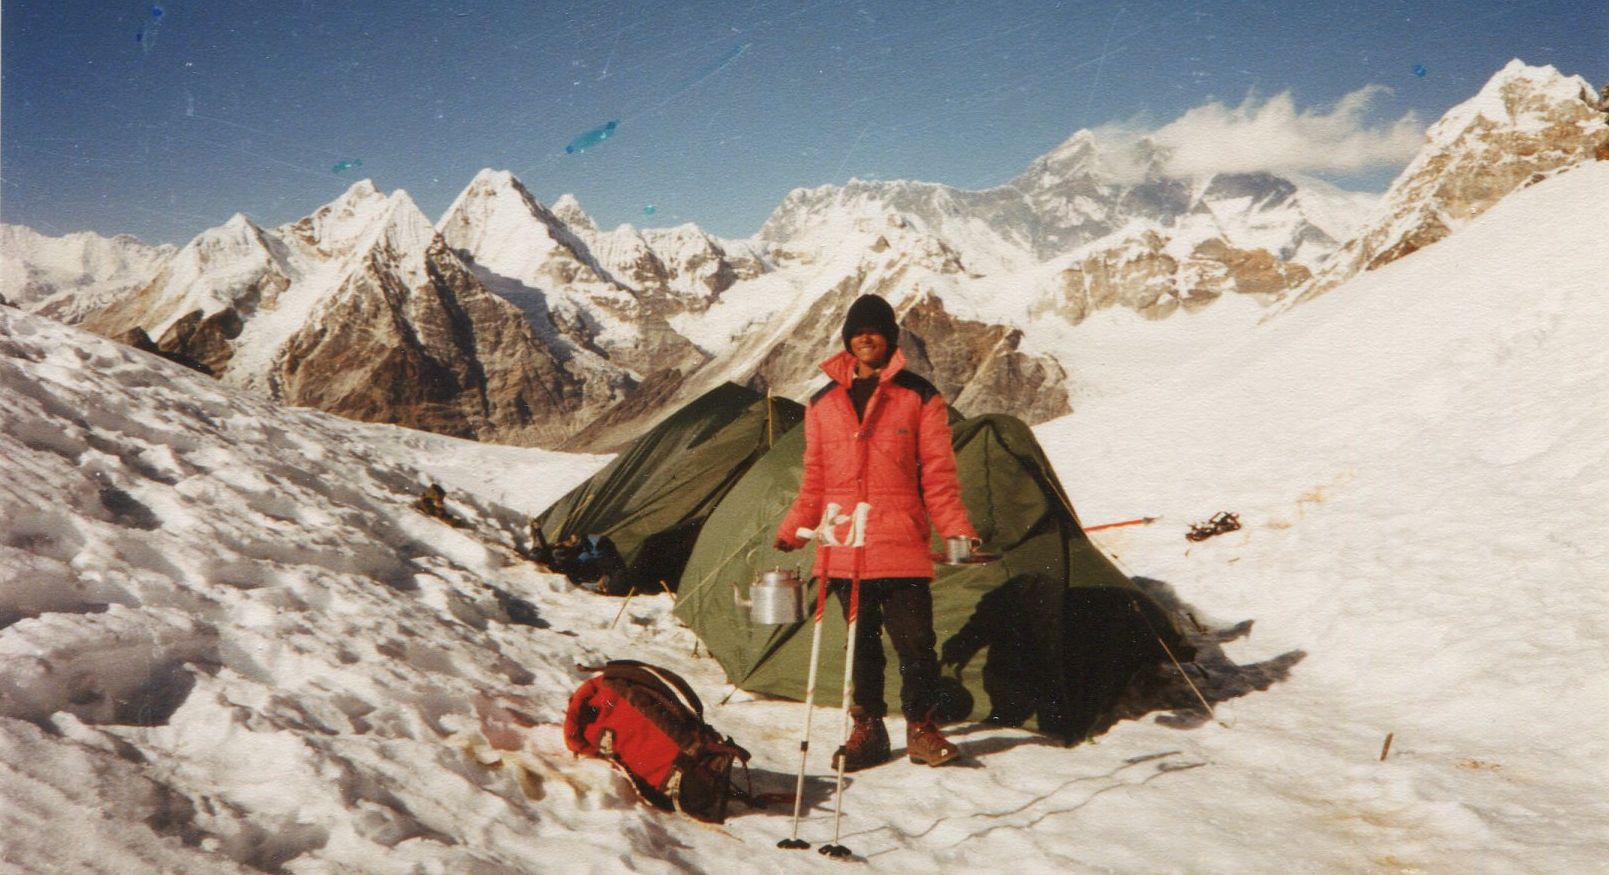 Everest from High Camp on Mera Peak